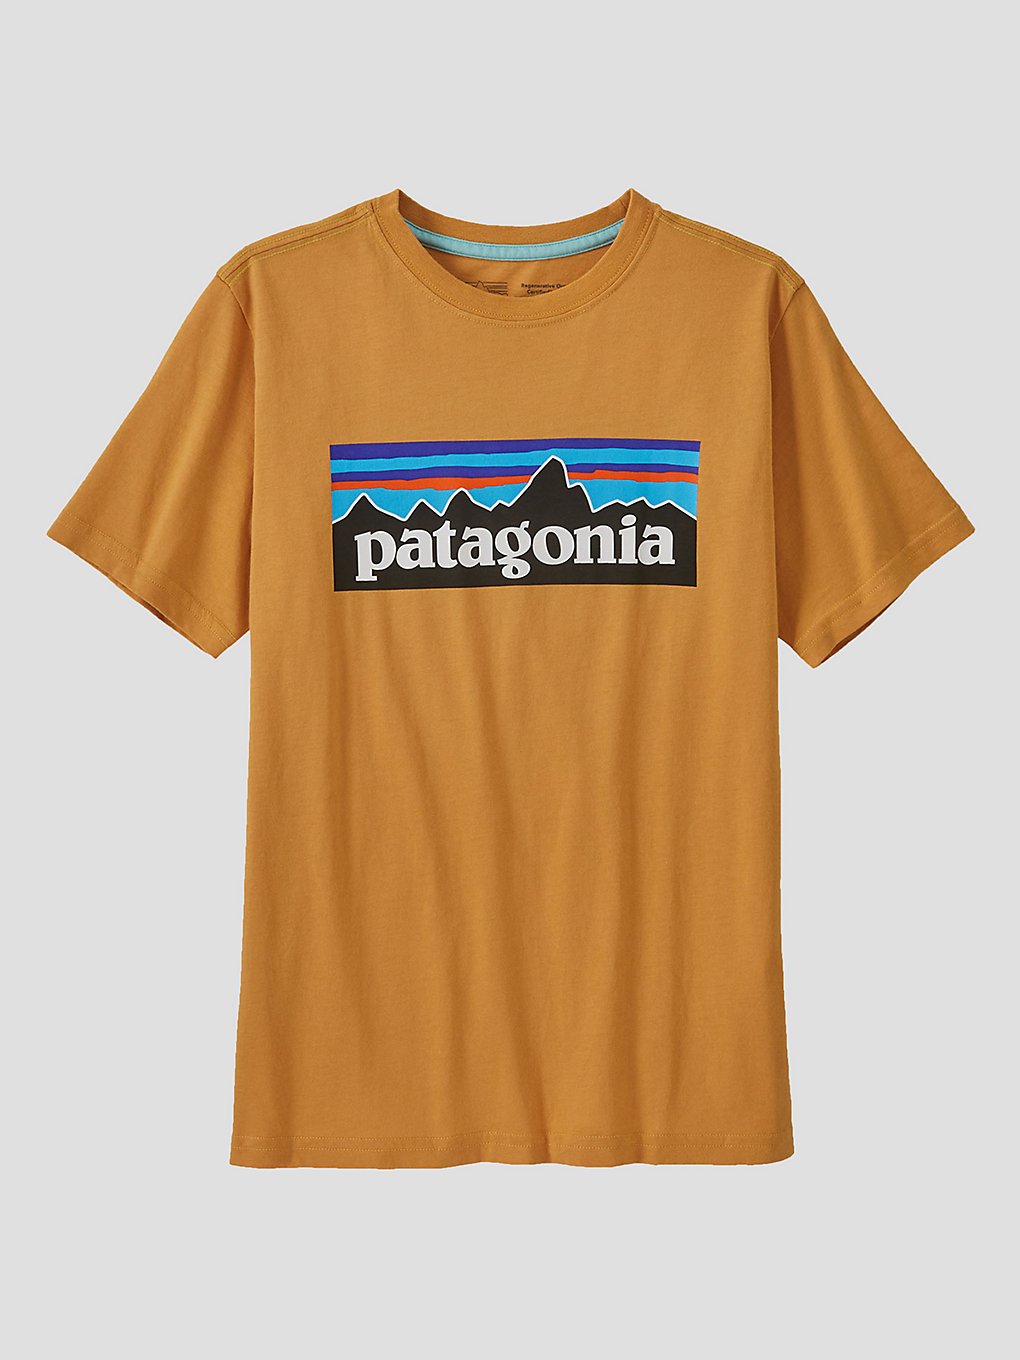 Patagonia Regenerative Organic Certified Cotton P- T-Shirt dried mango kaufen